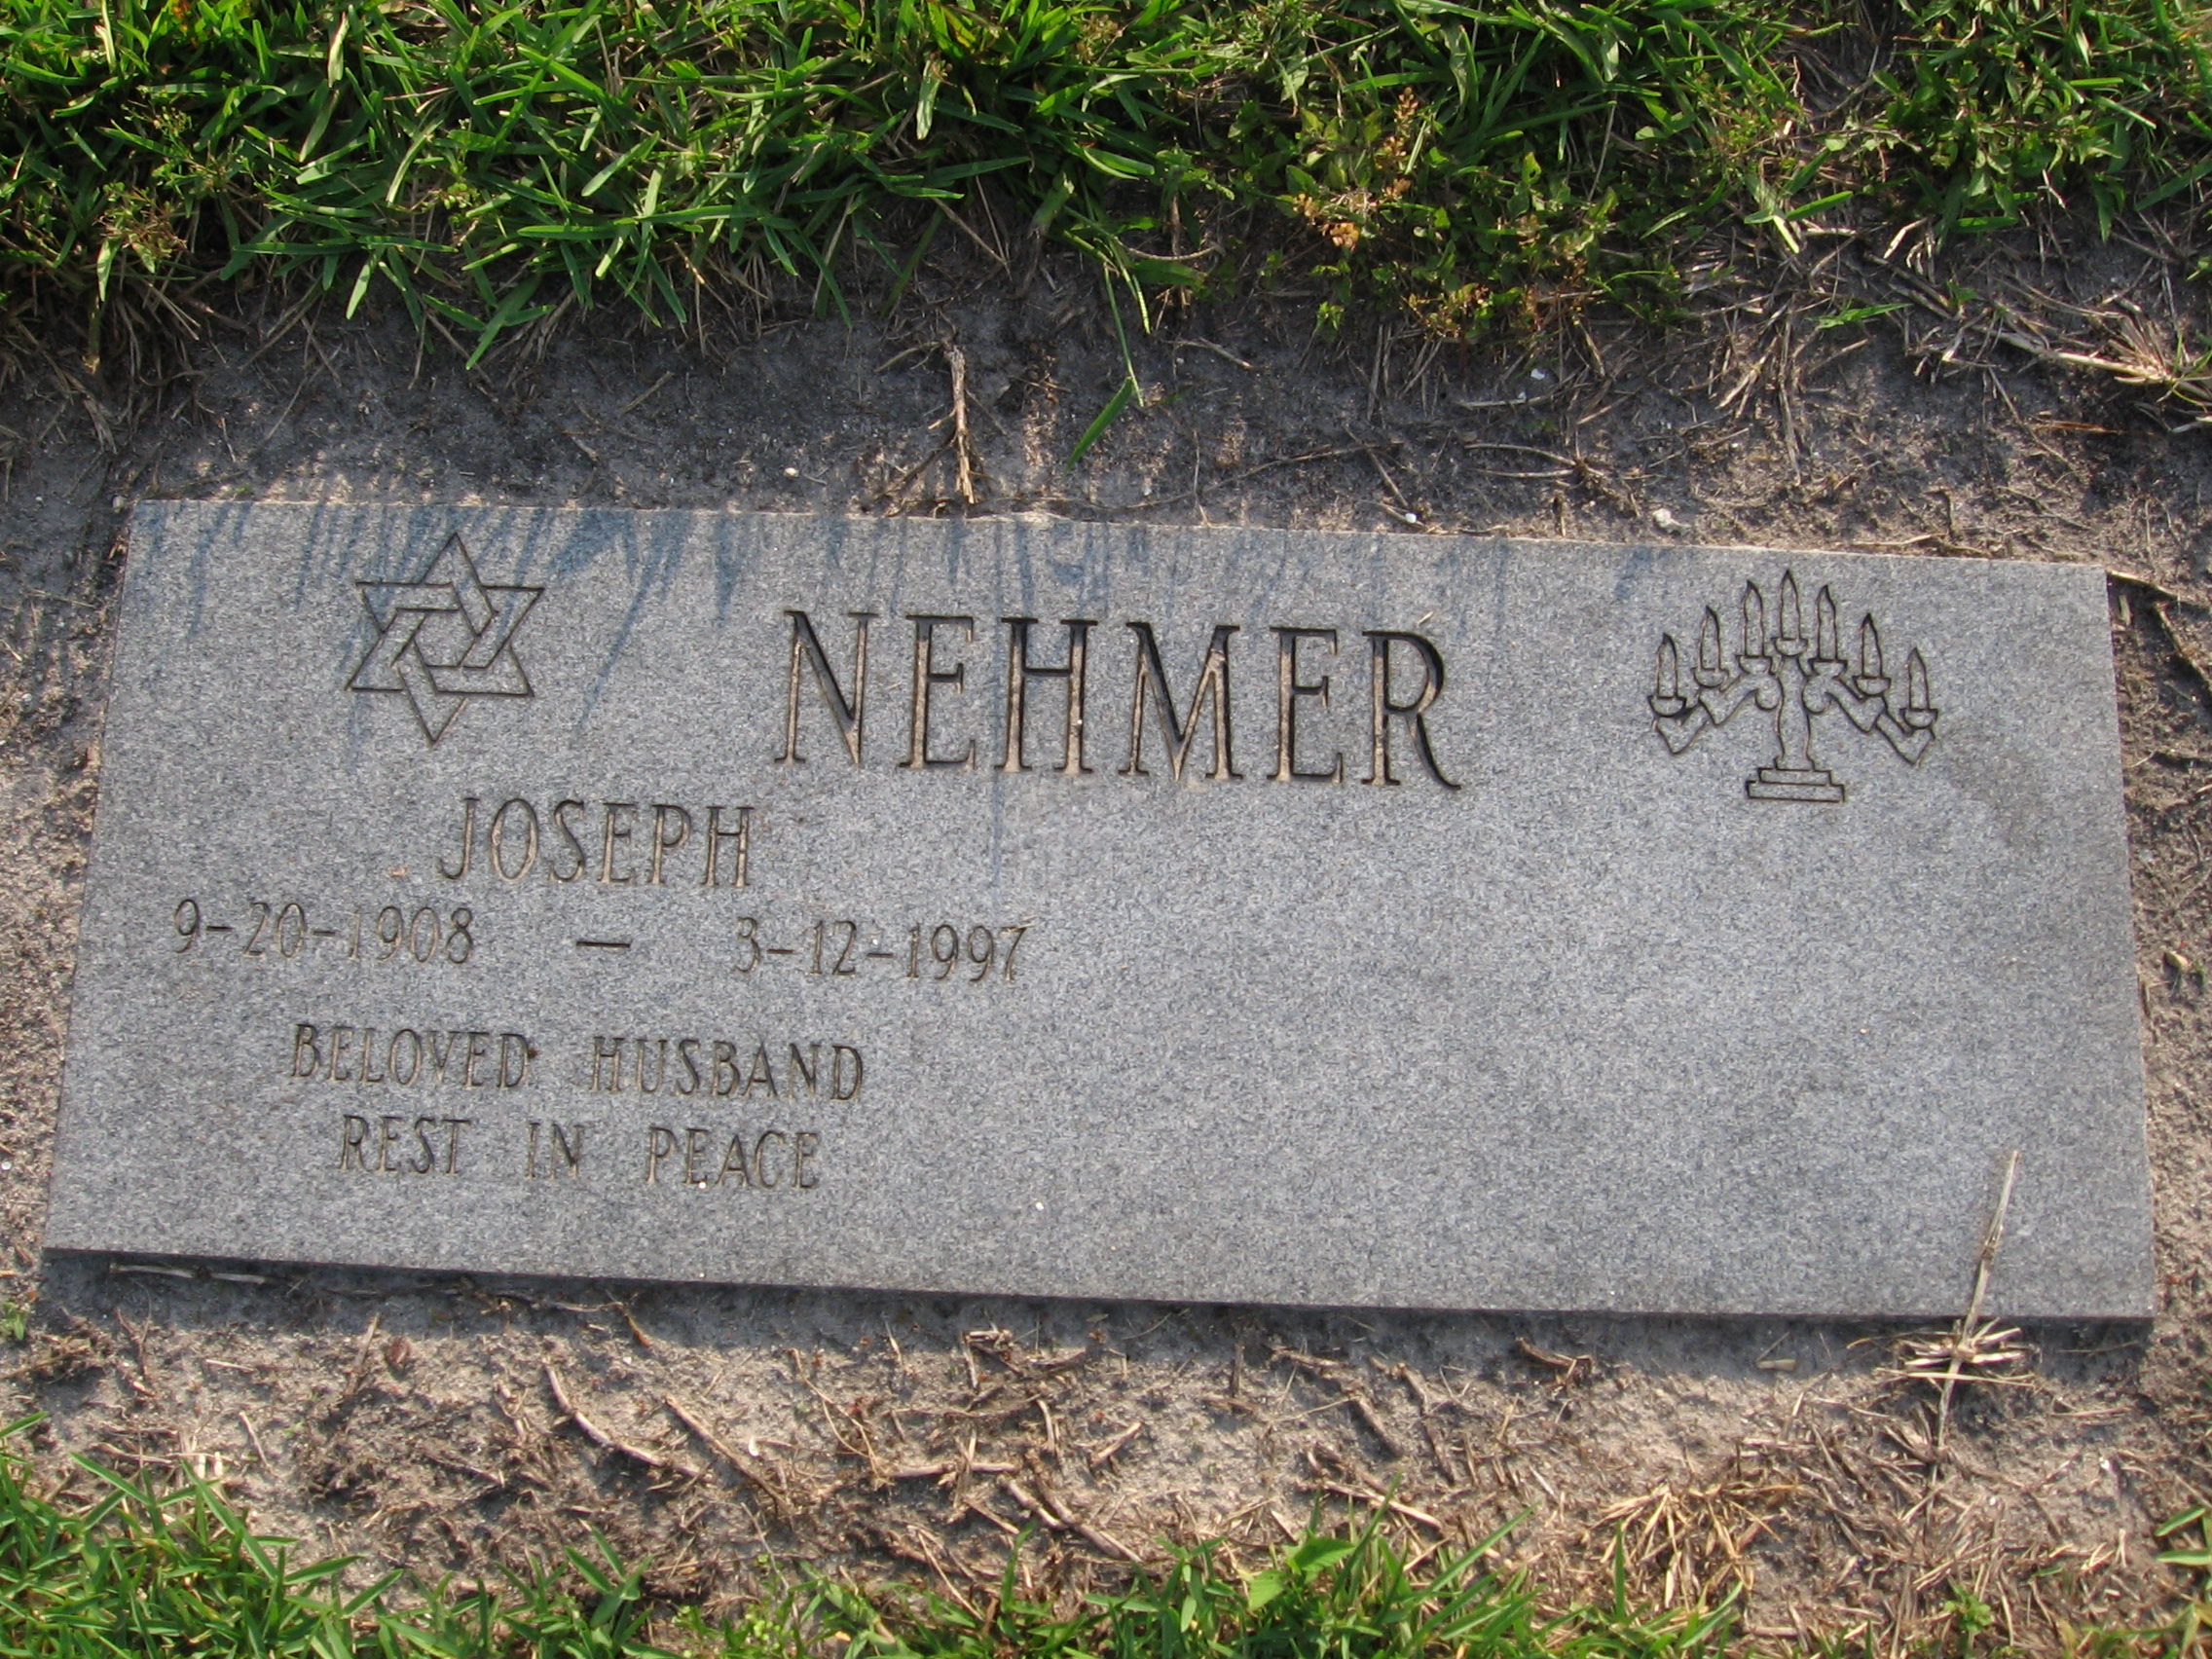 Joseph Nehmer